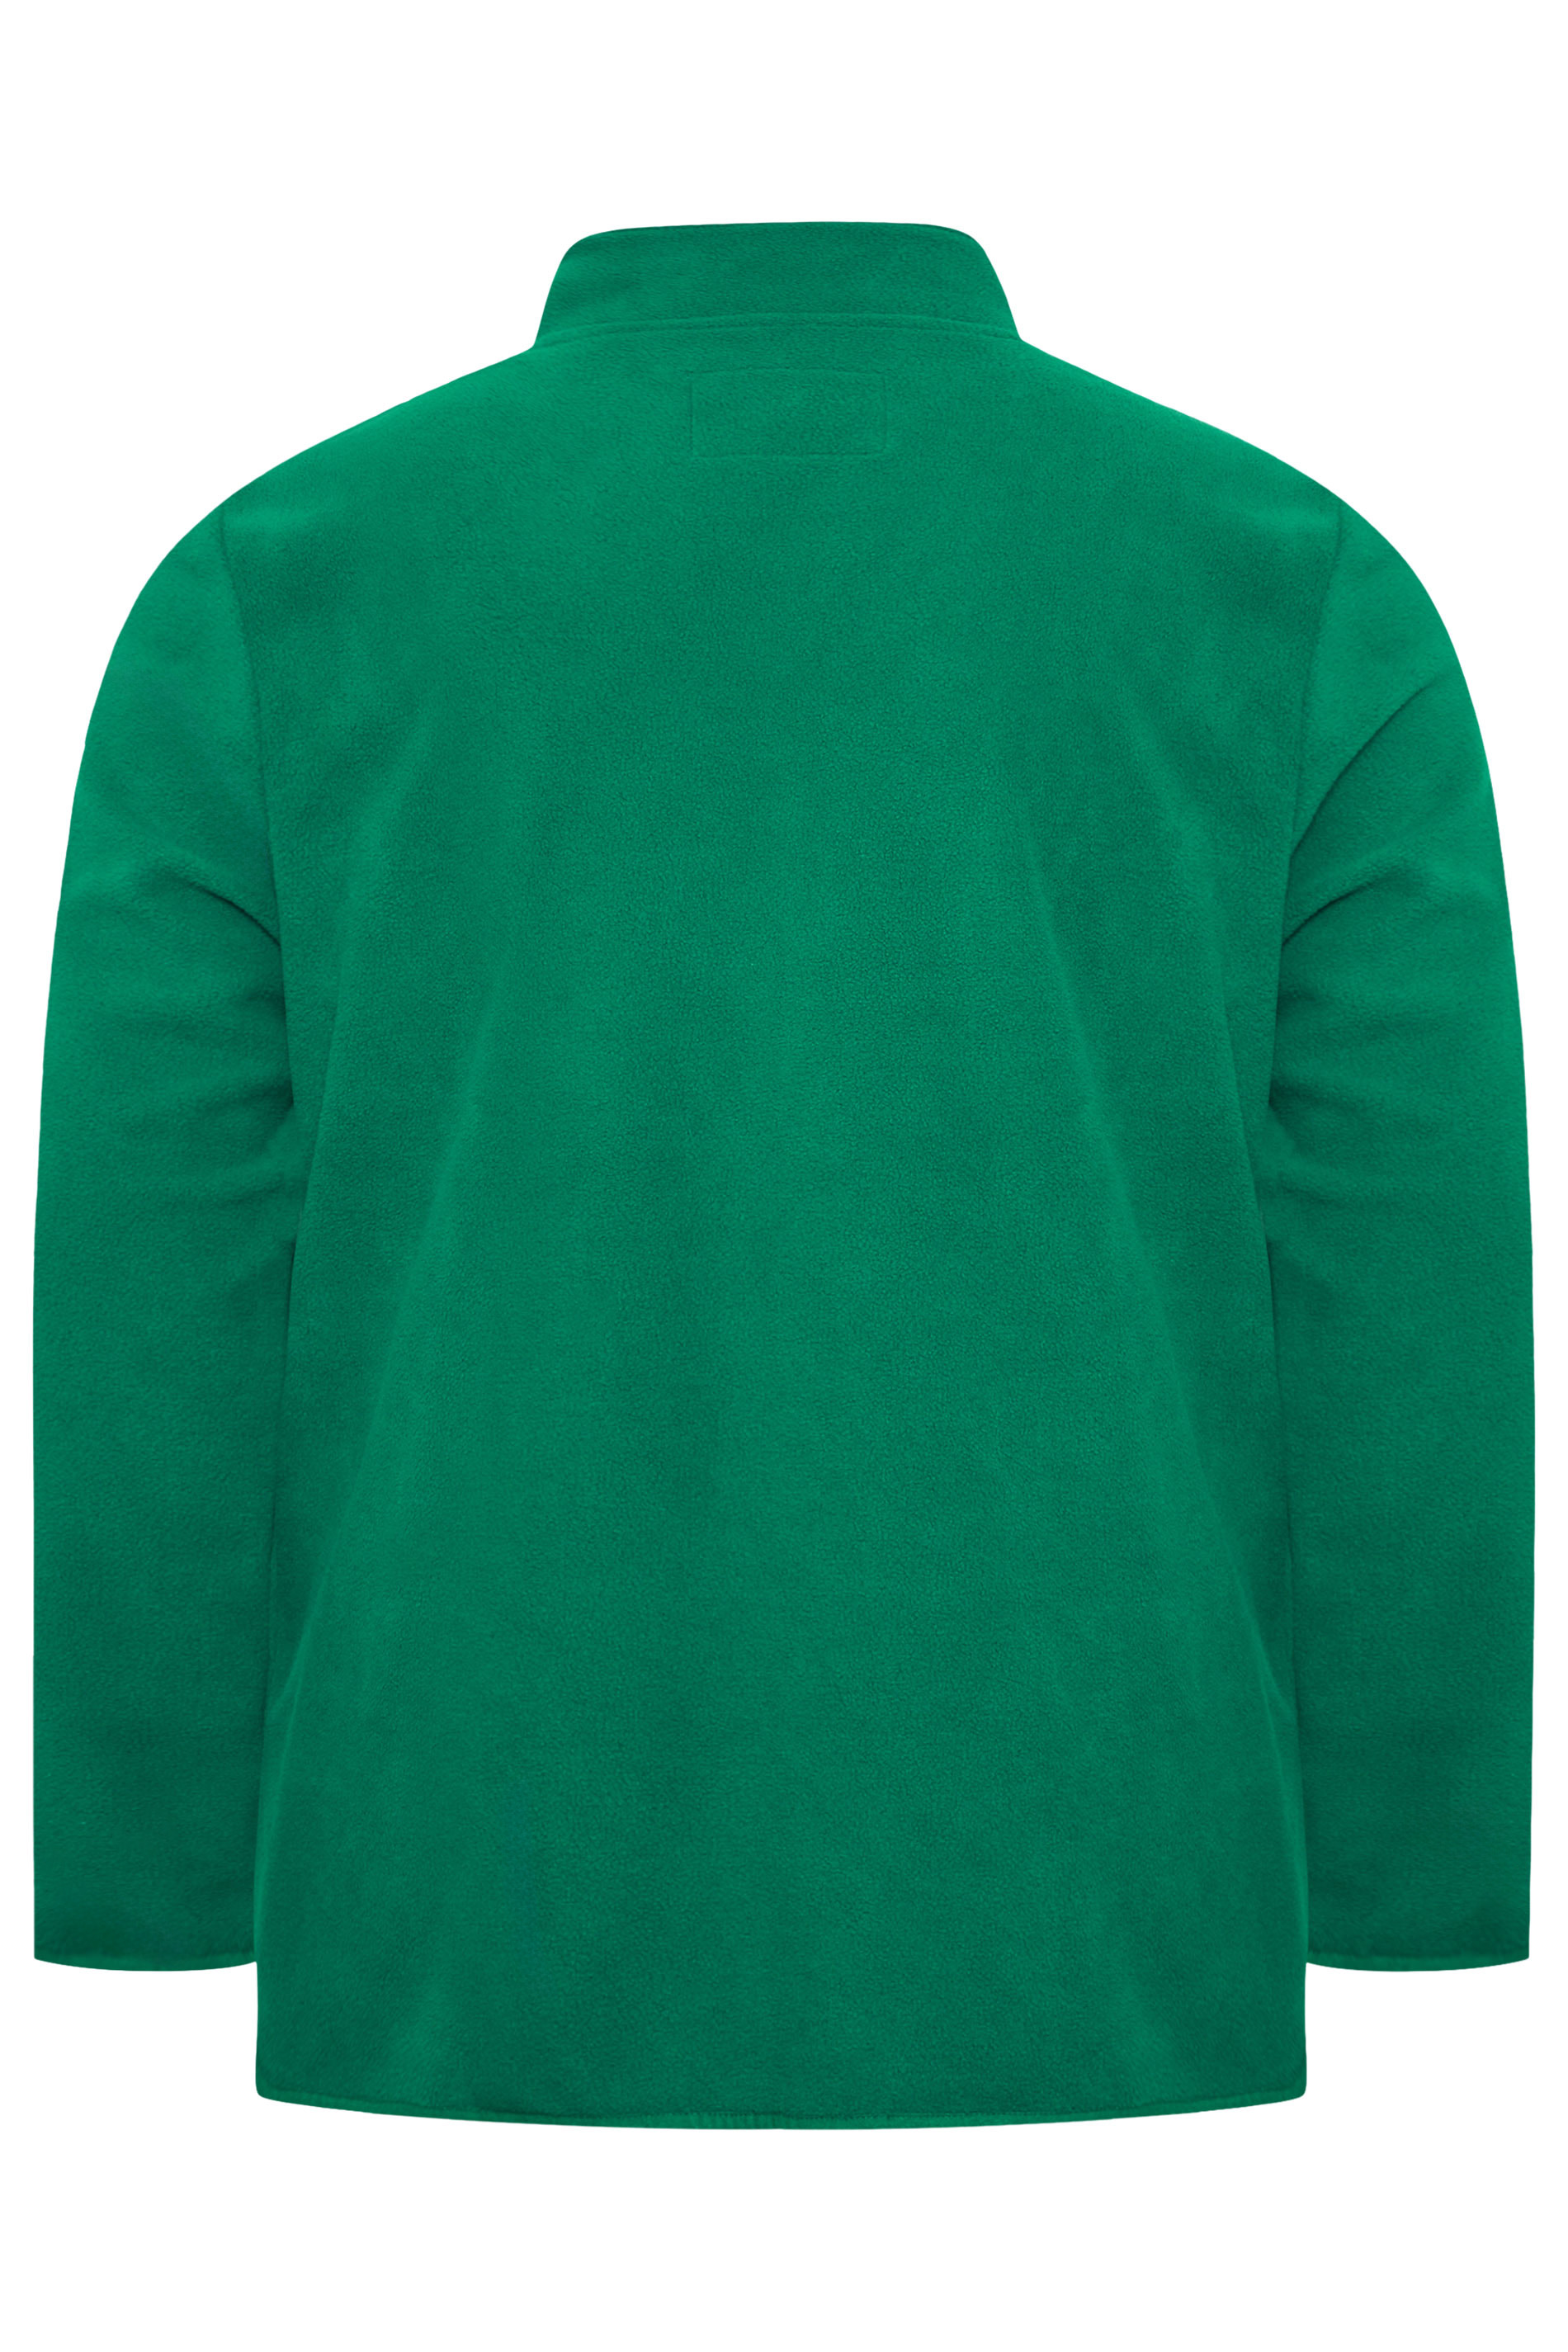 BadRhino Big & Tall Green Essential Zip Through Fleece | BadRhino 3